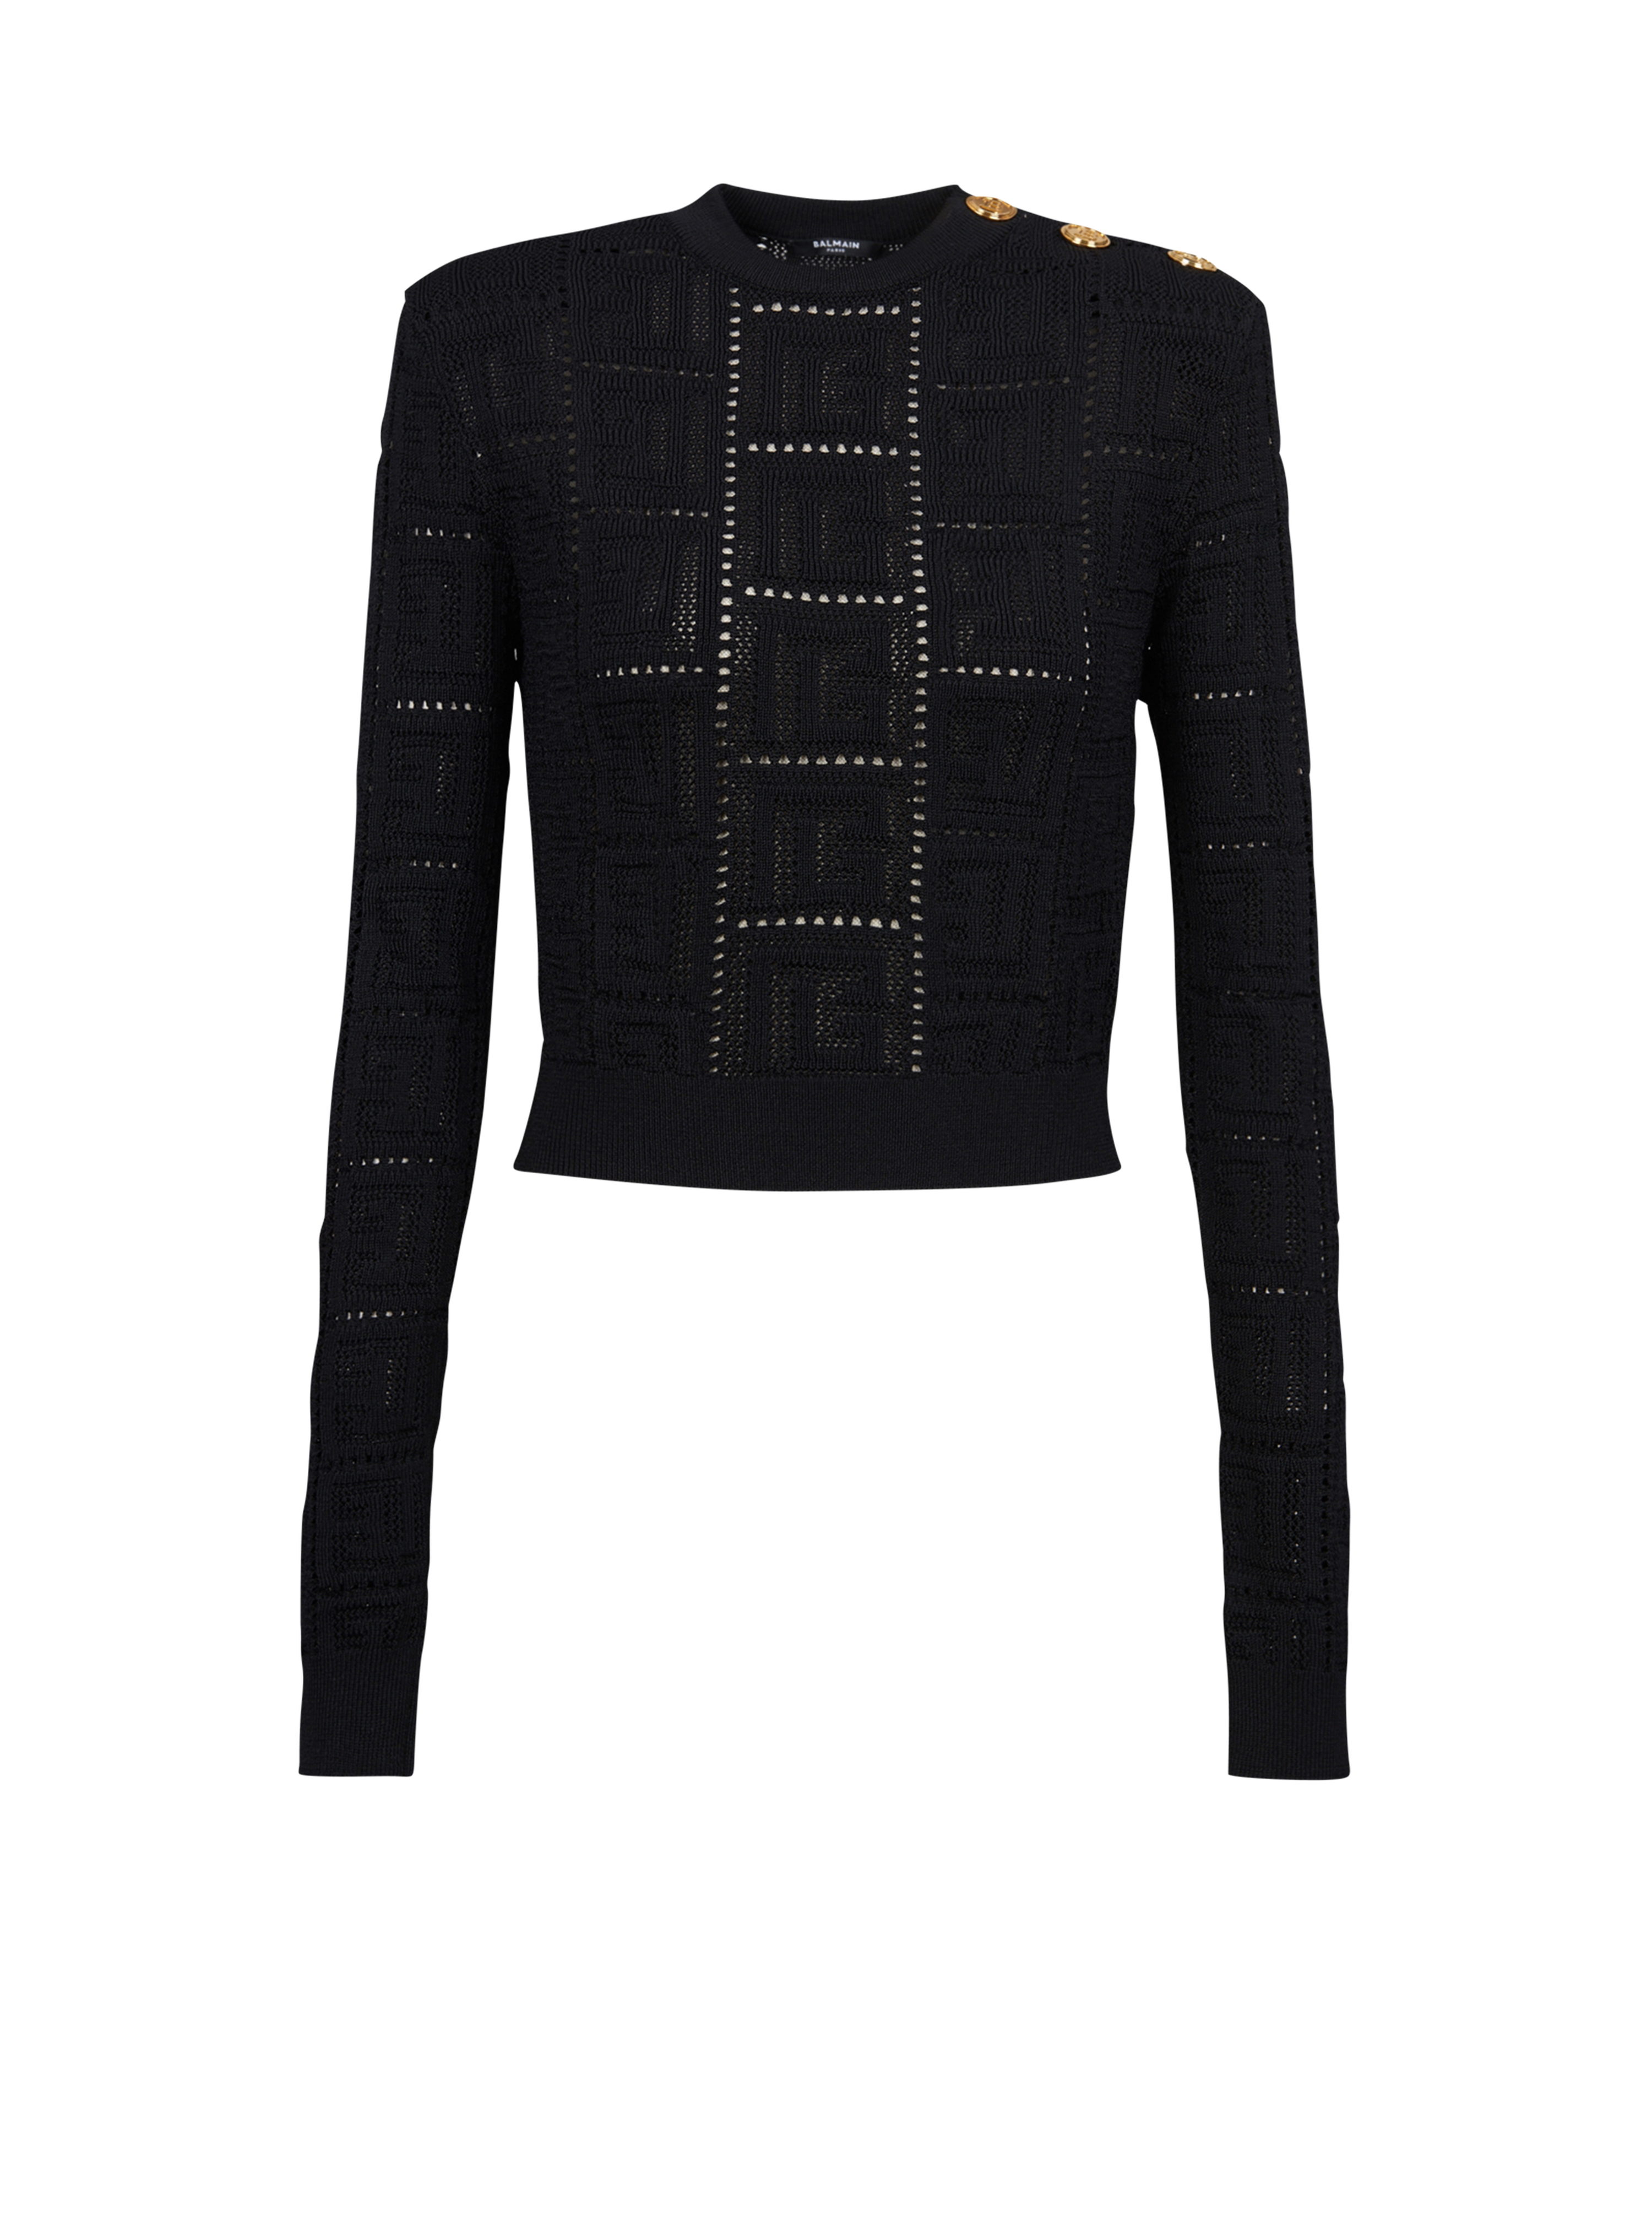 Cropped eco-designed sweater with Balmain monogram, black